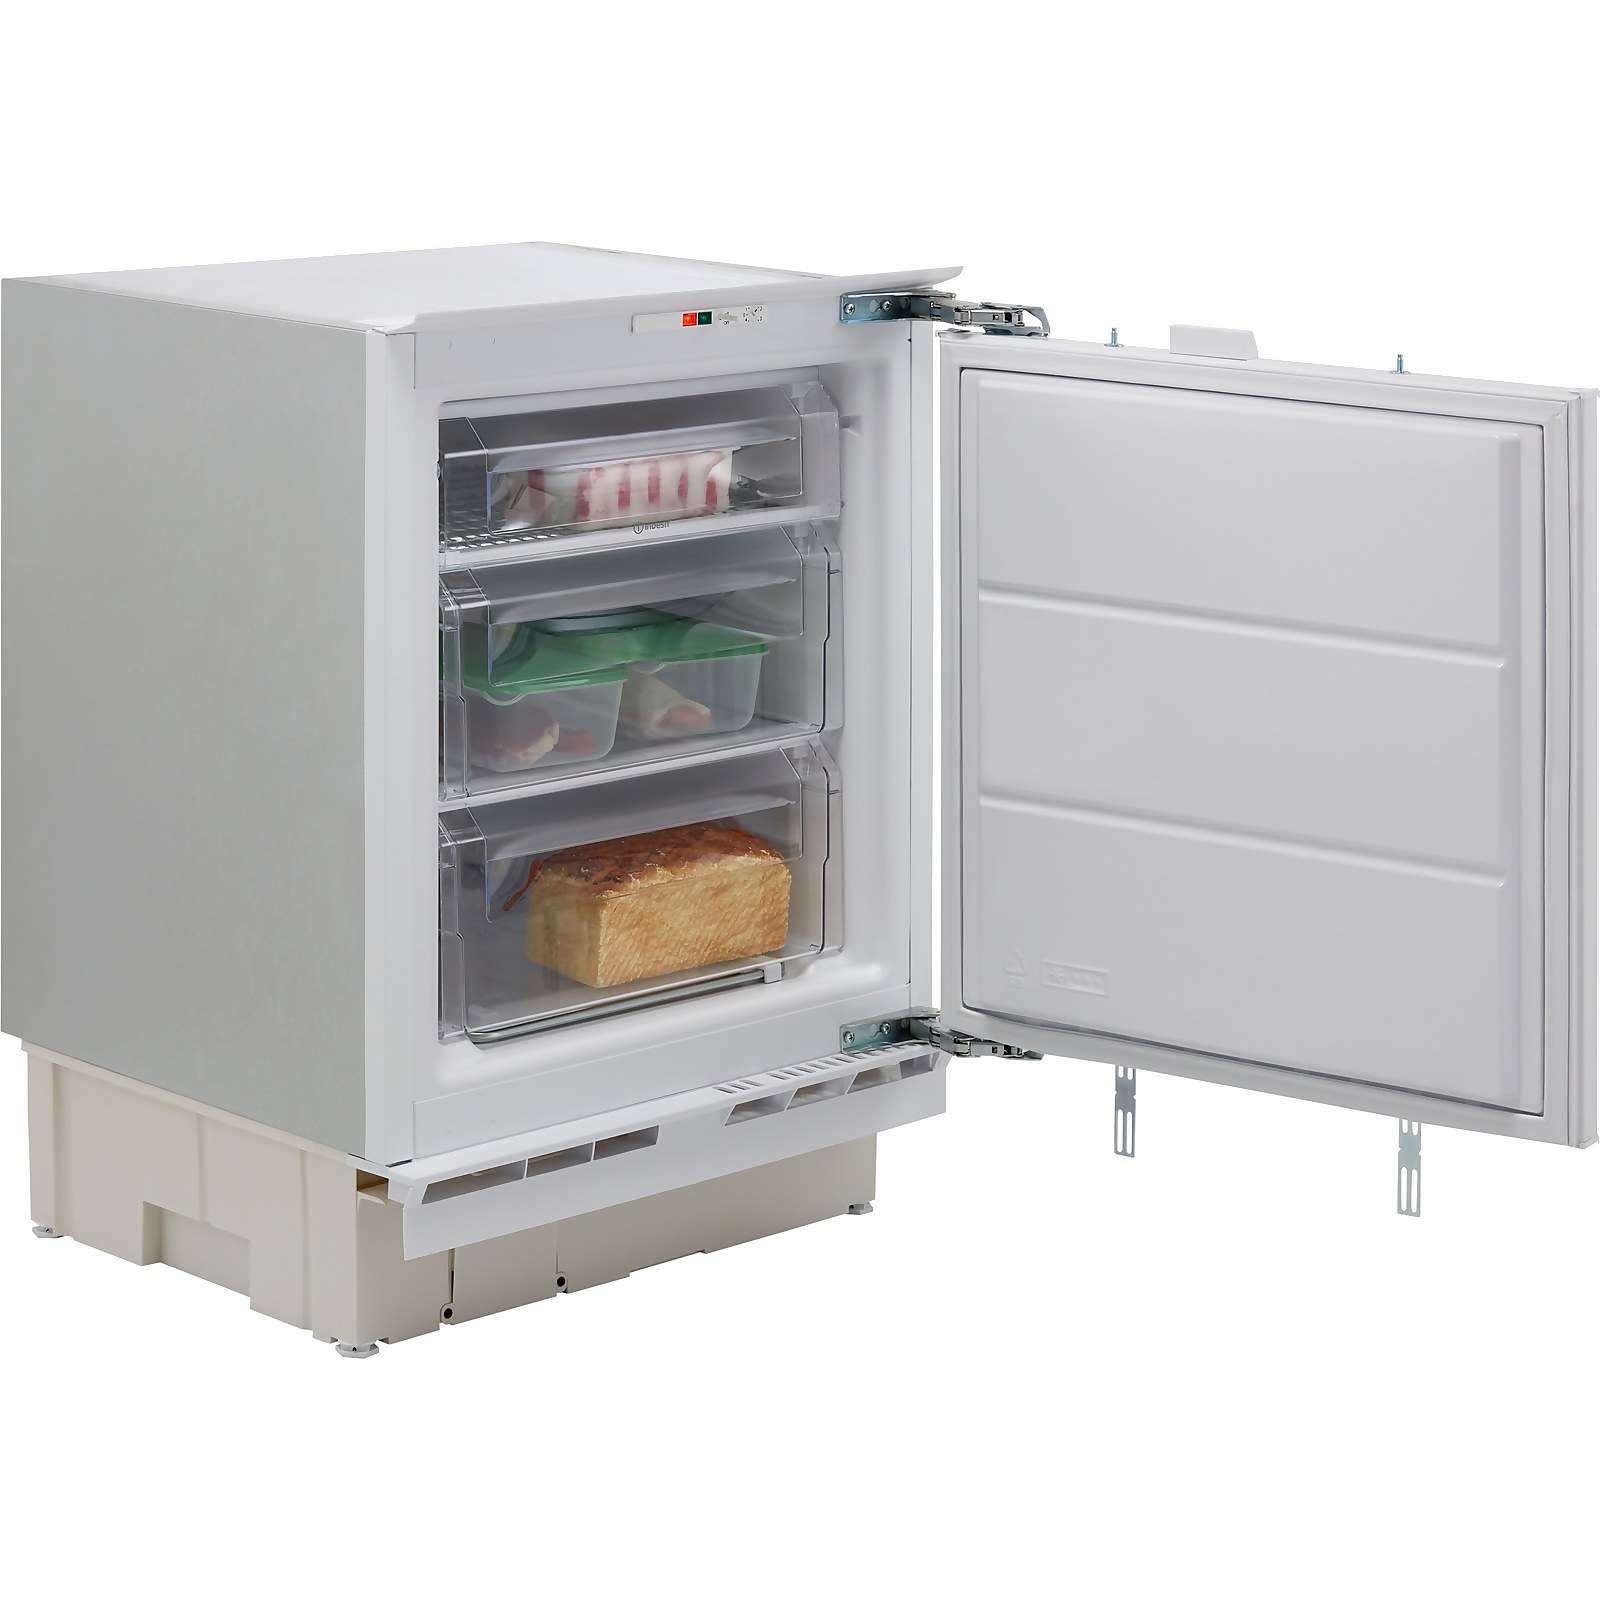 Indesit IZA1.UK1 Integrated Under Counter Freezer with Fixed Door Fixing Kit